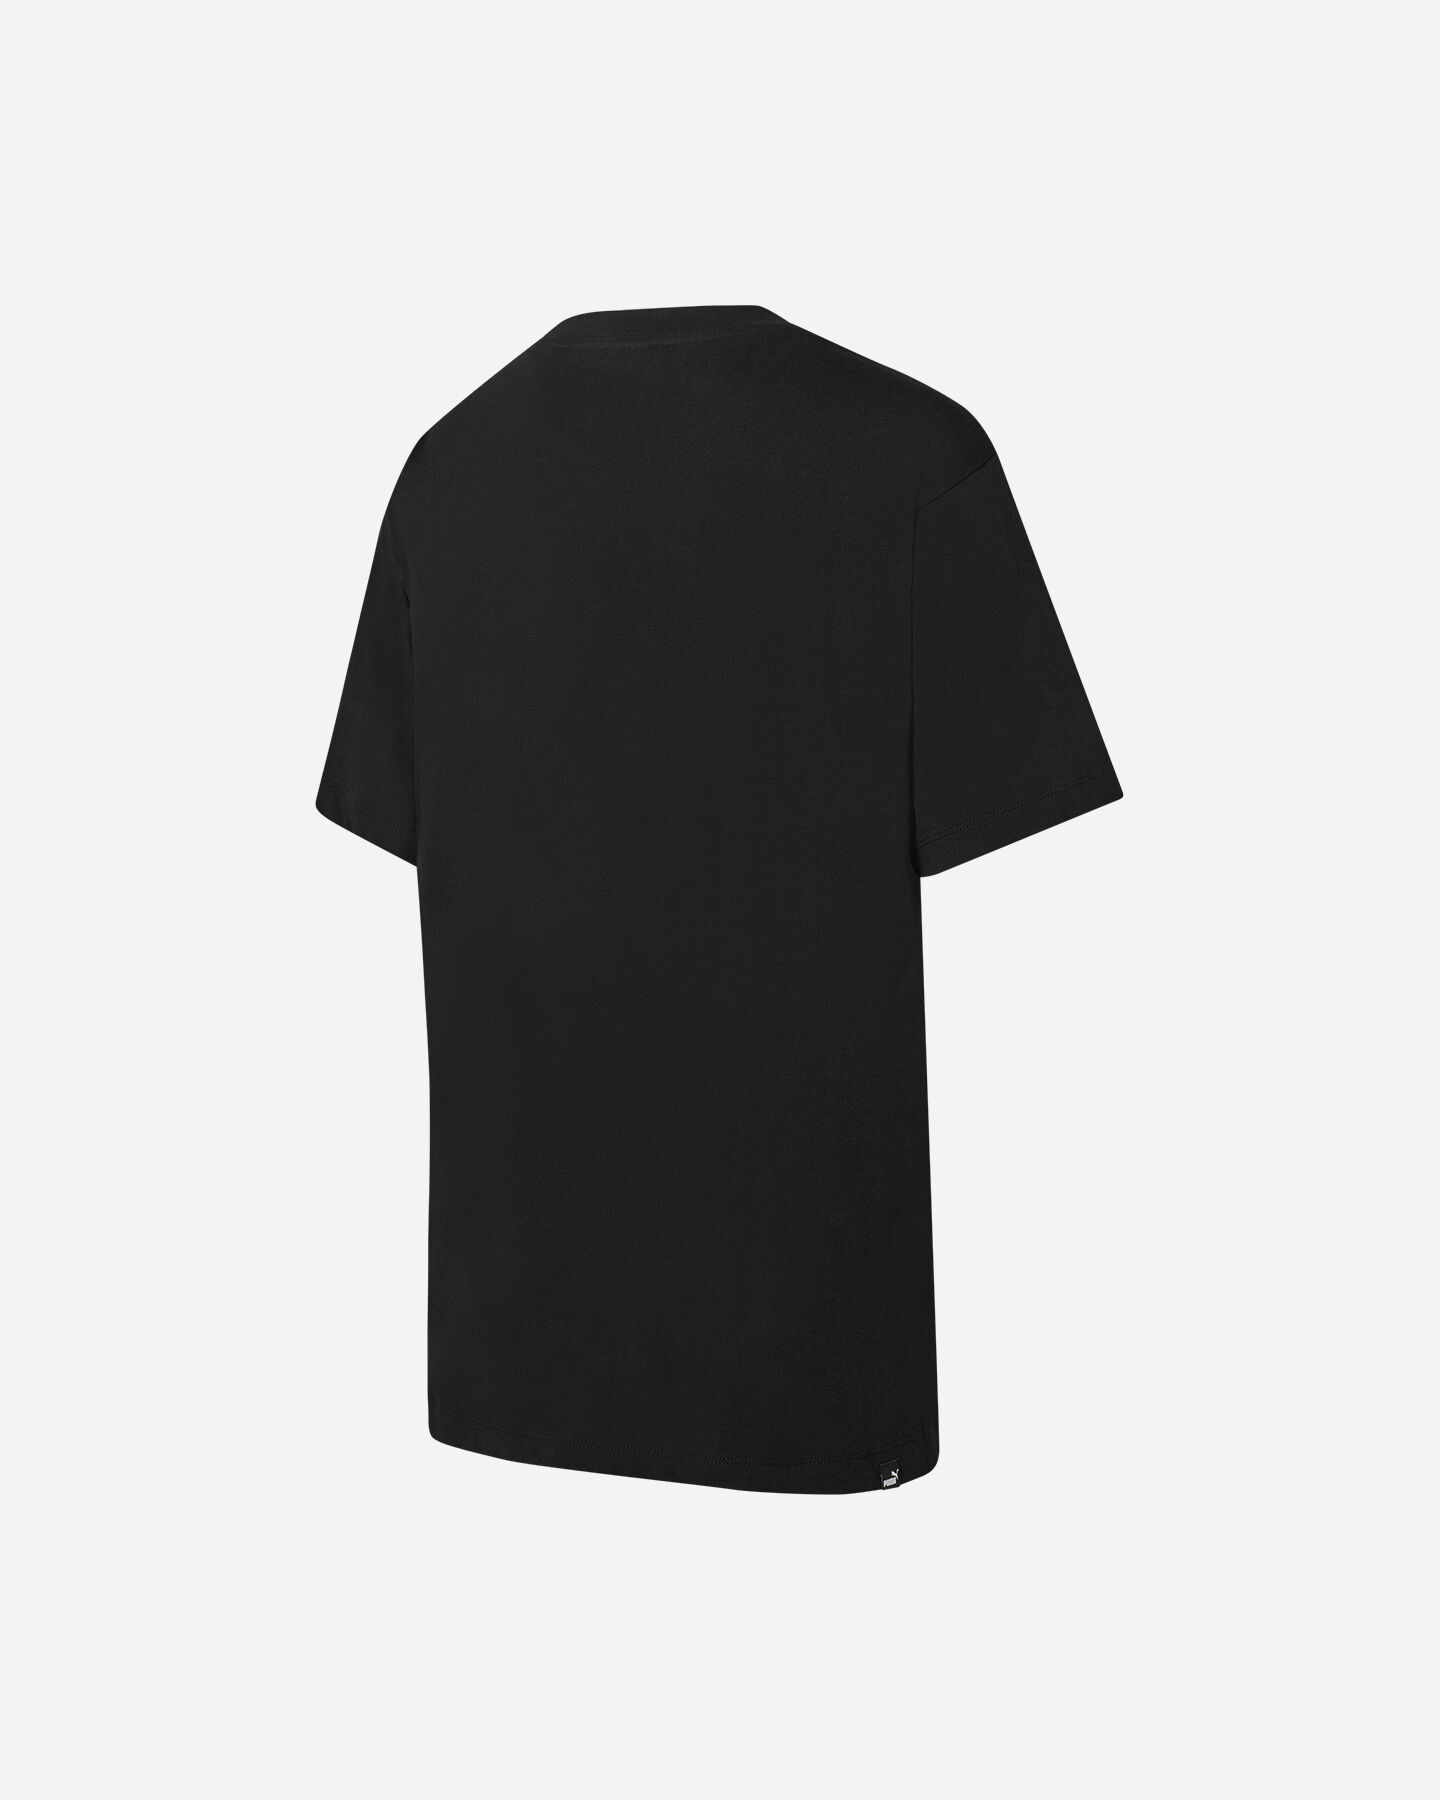  T-Shirt PUMA BIG LOGO COLOR W S5547461 scatto 1